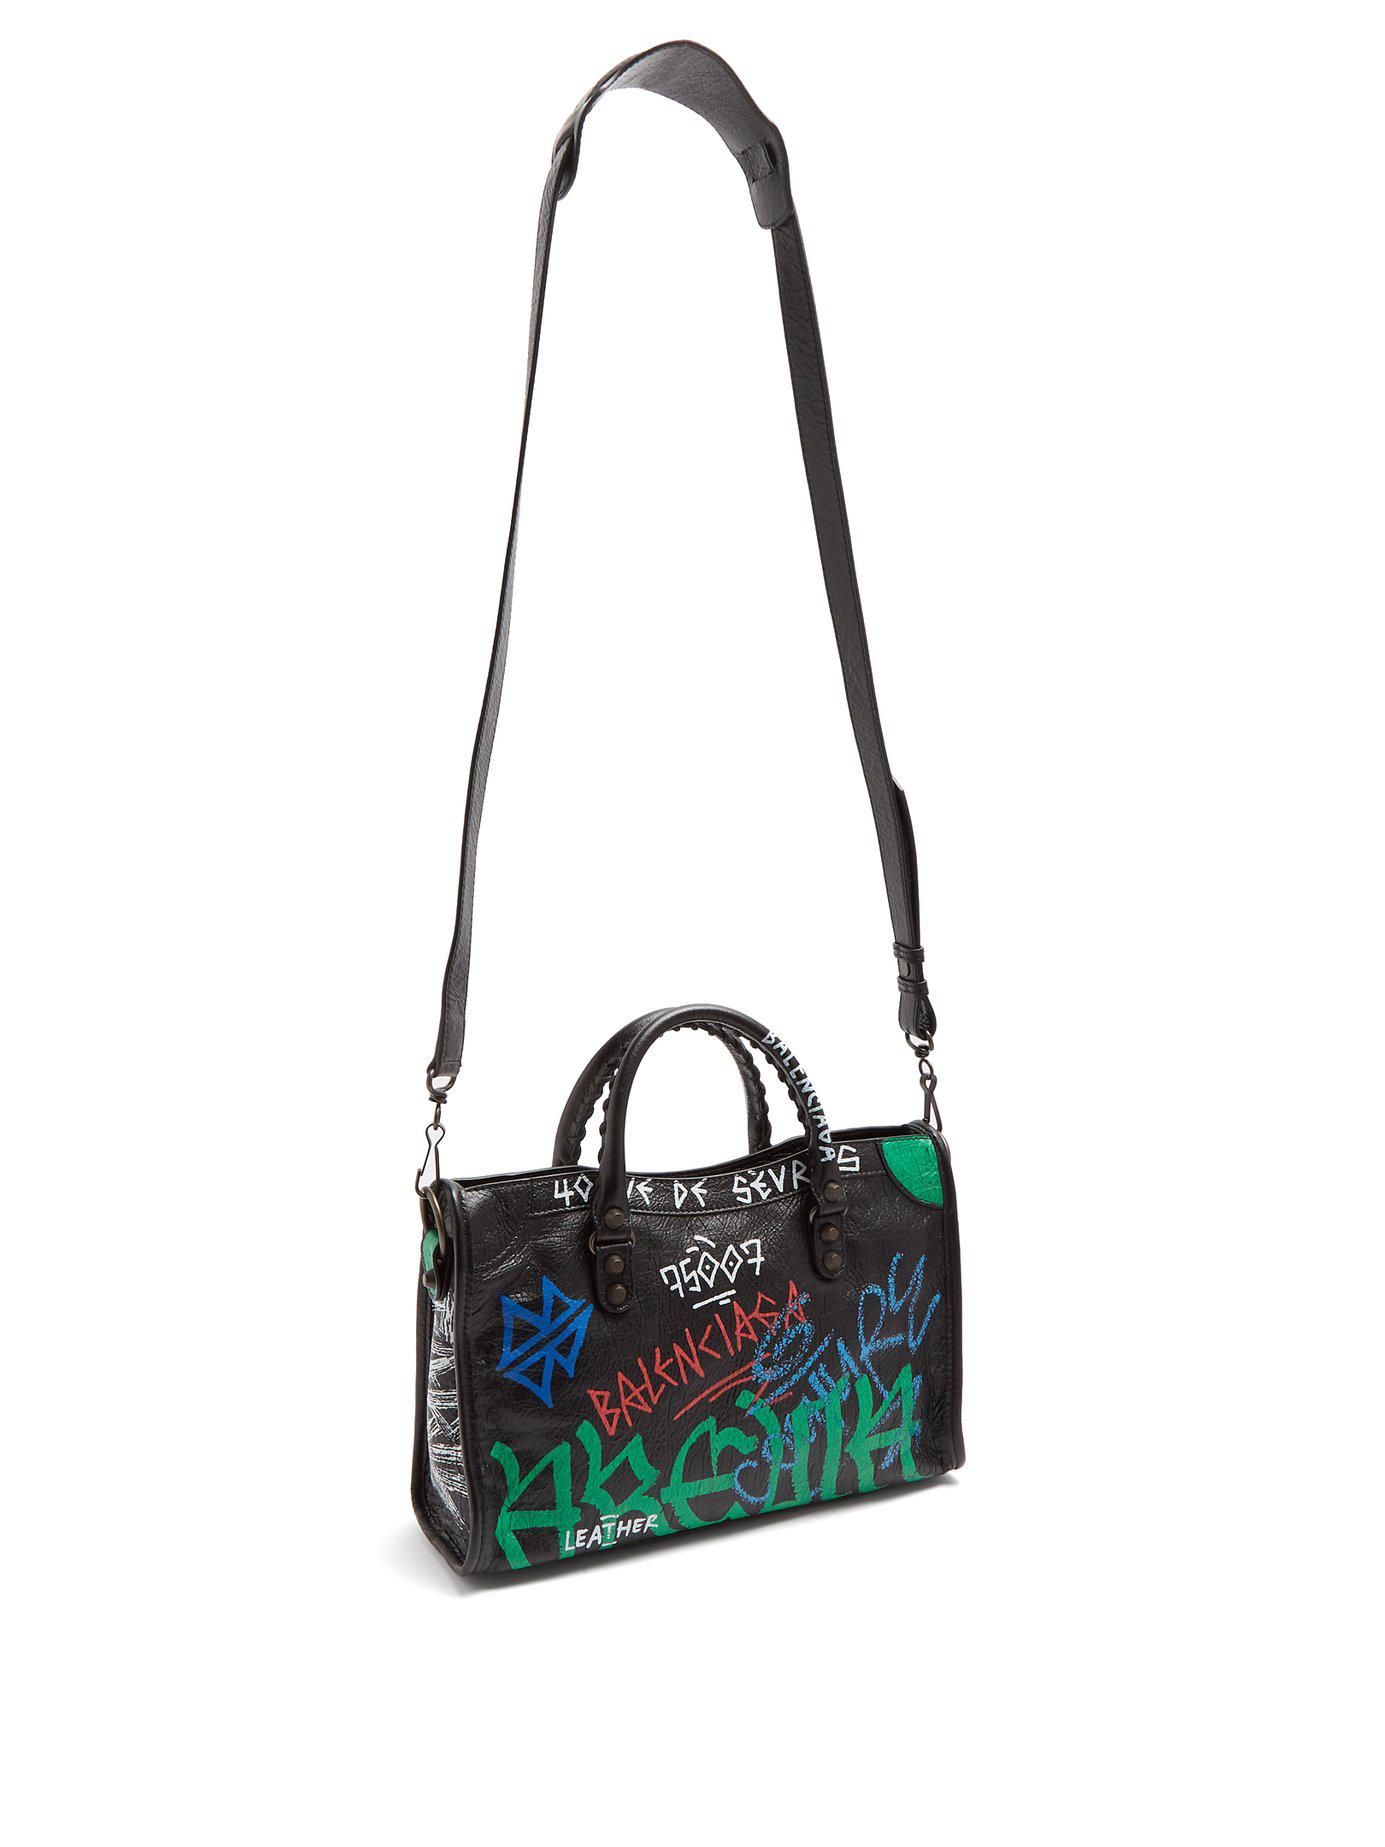 Balenciaga Leather Classic City S Bag Graffiti in Black Green (Black) - Lyst